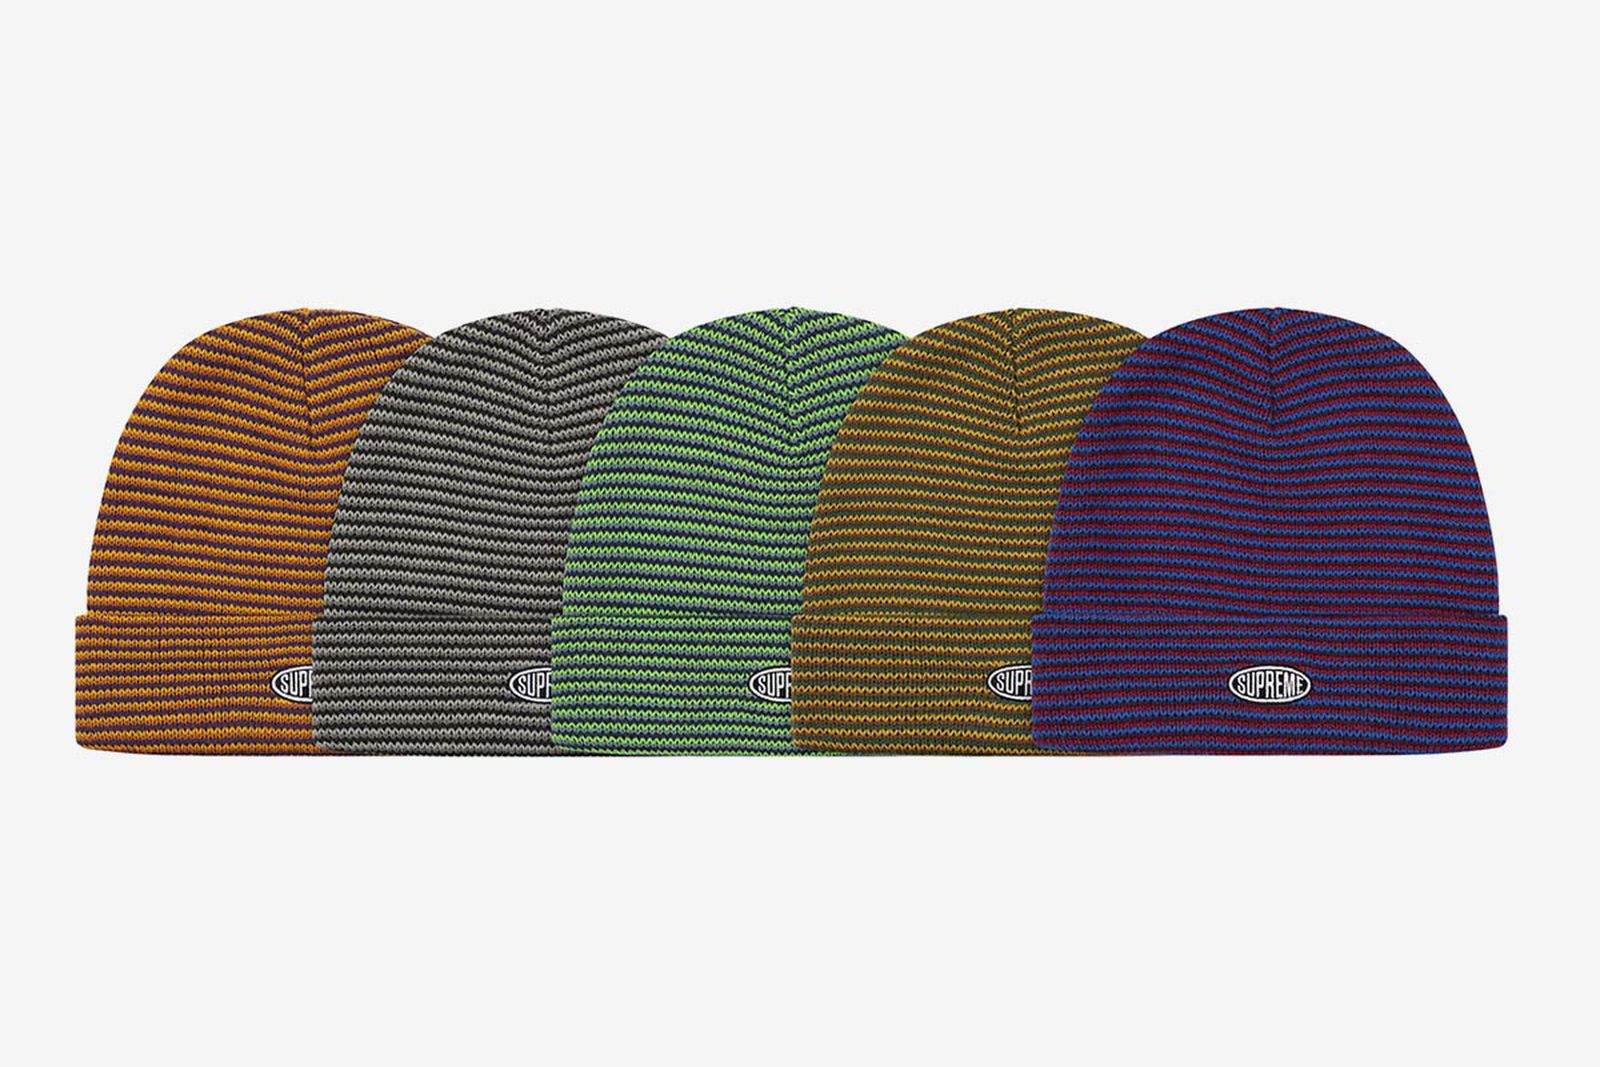 supreme fall winter 2019 hats